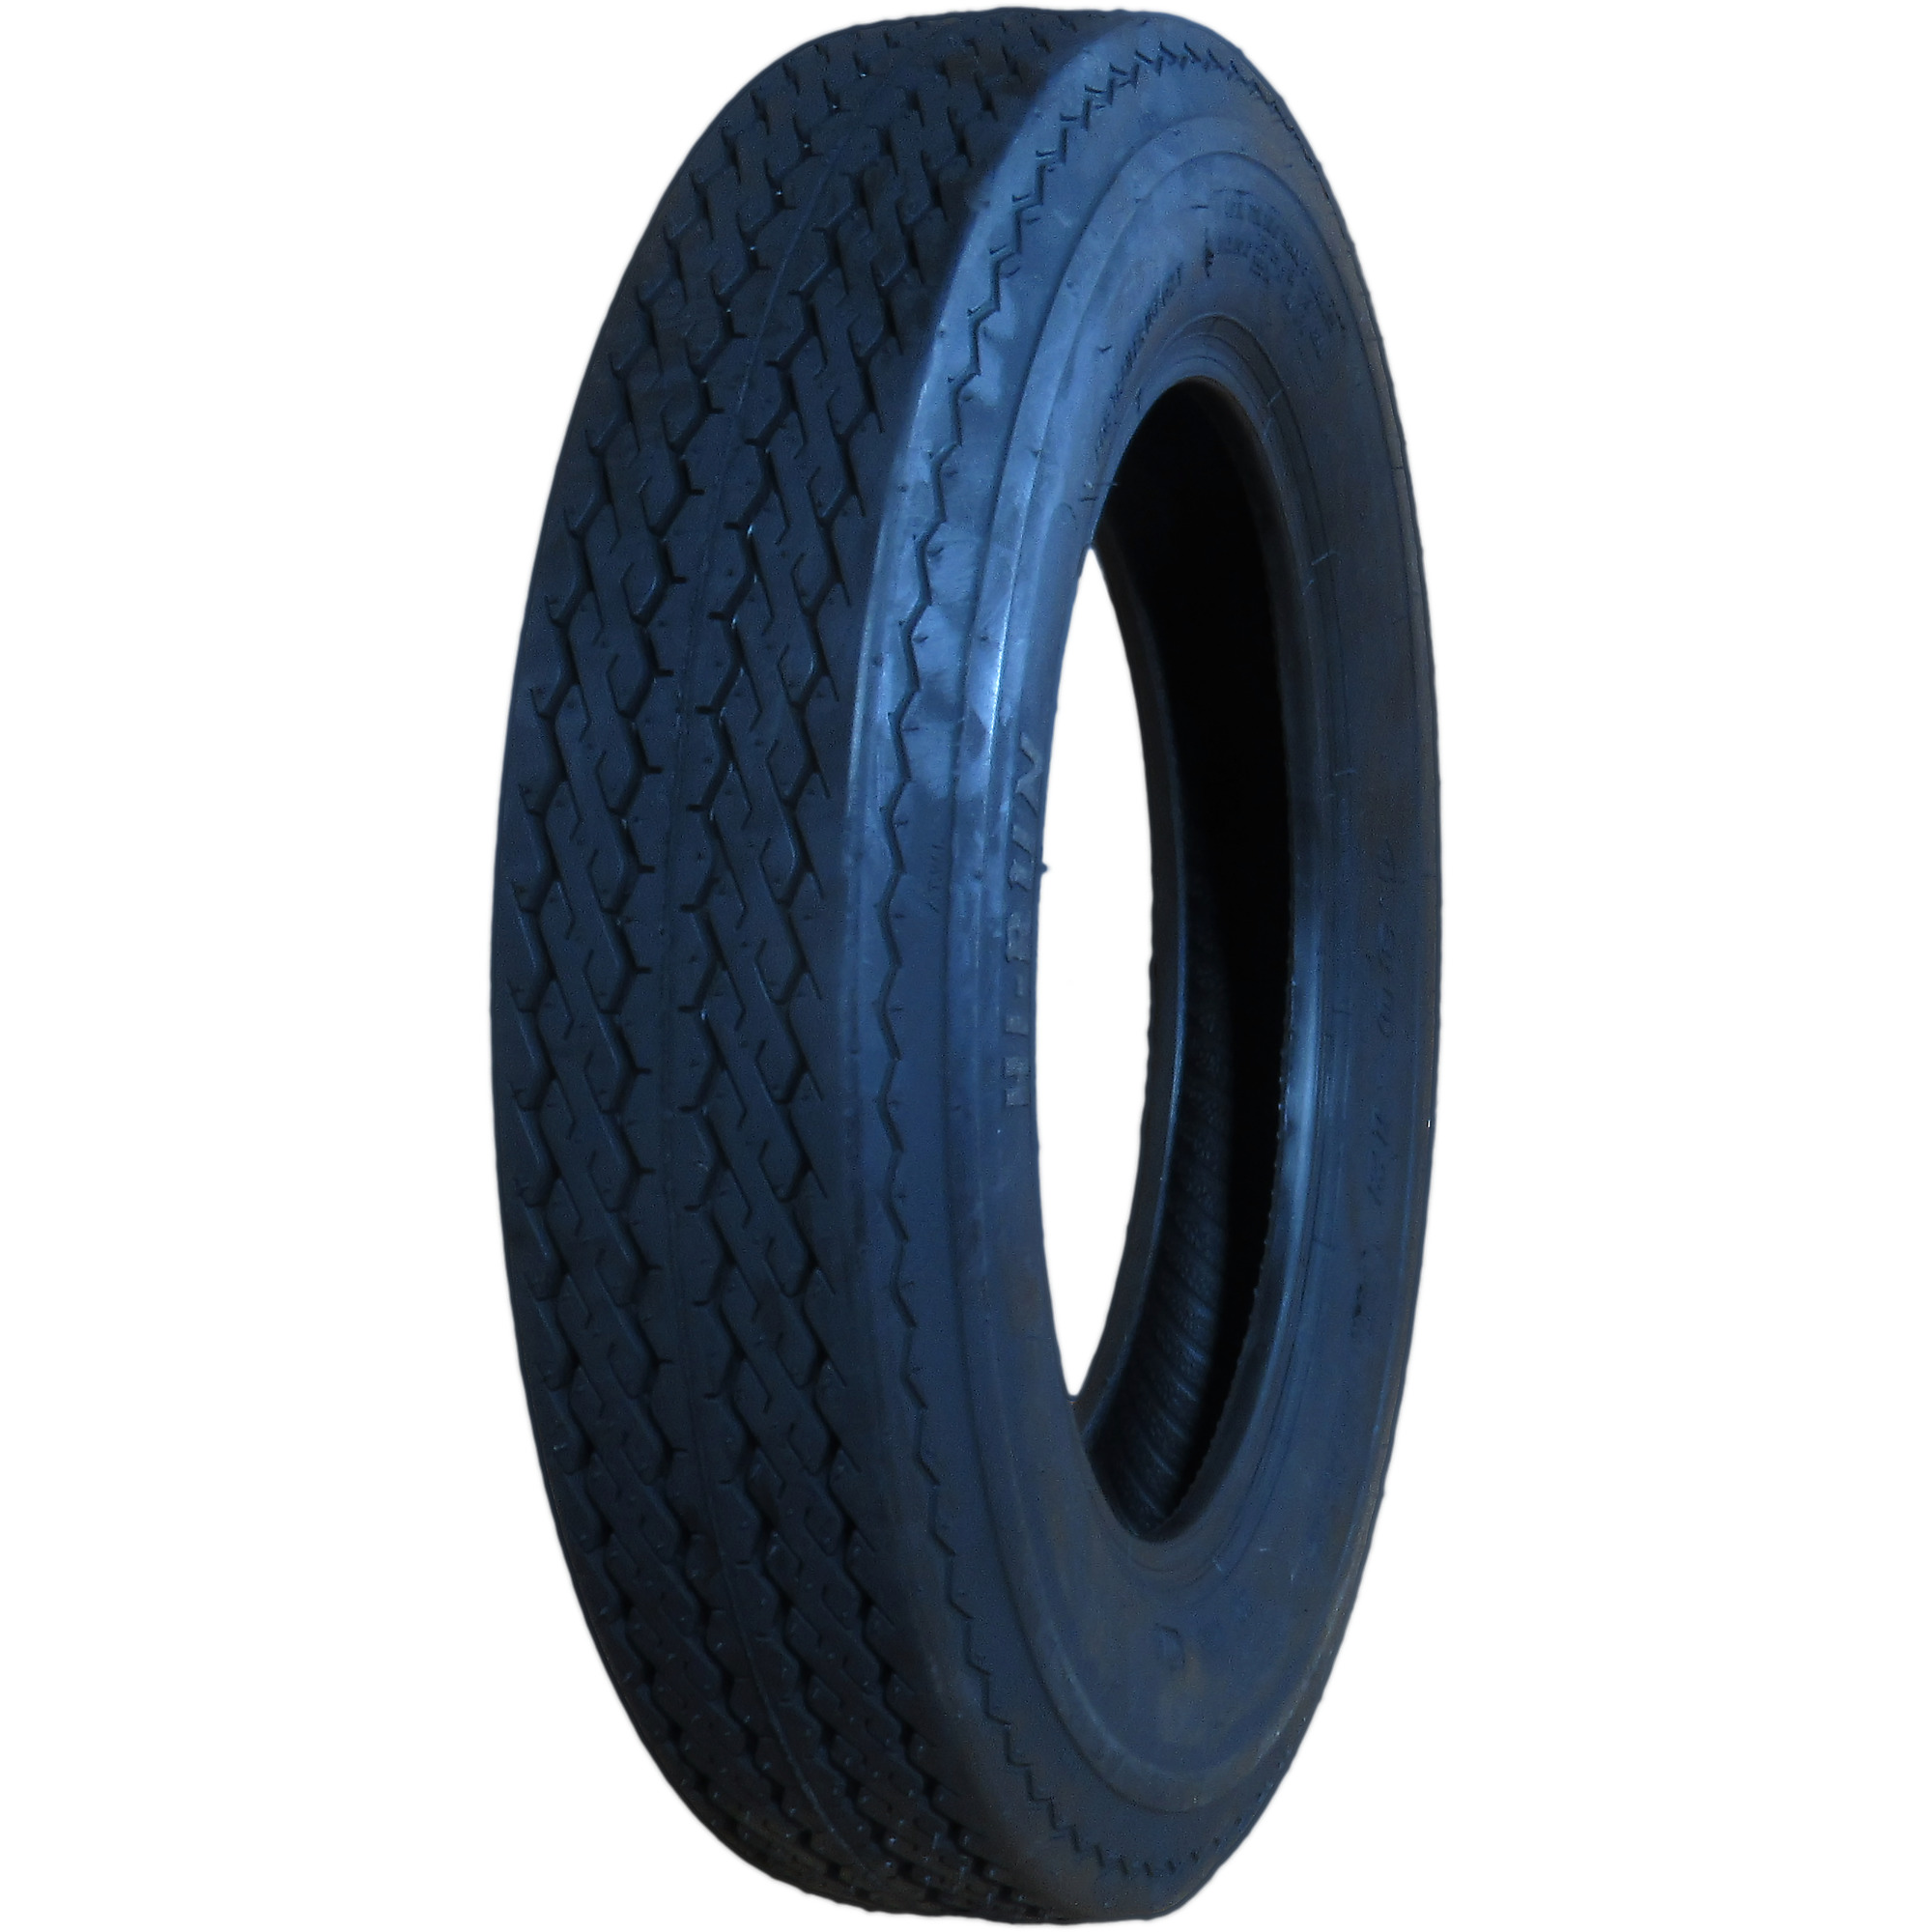 HI-RUN, Highway Trailer Tire, Bias-ply, Tire Size 5.30-12 Load Range Rating B, Model WD1013